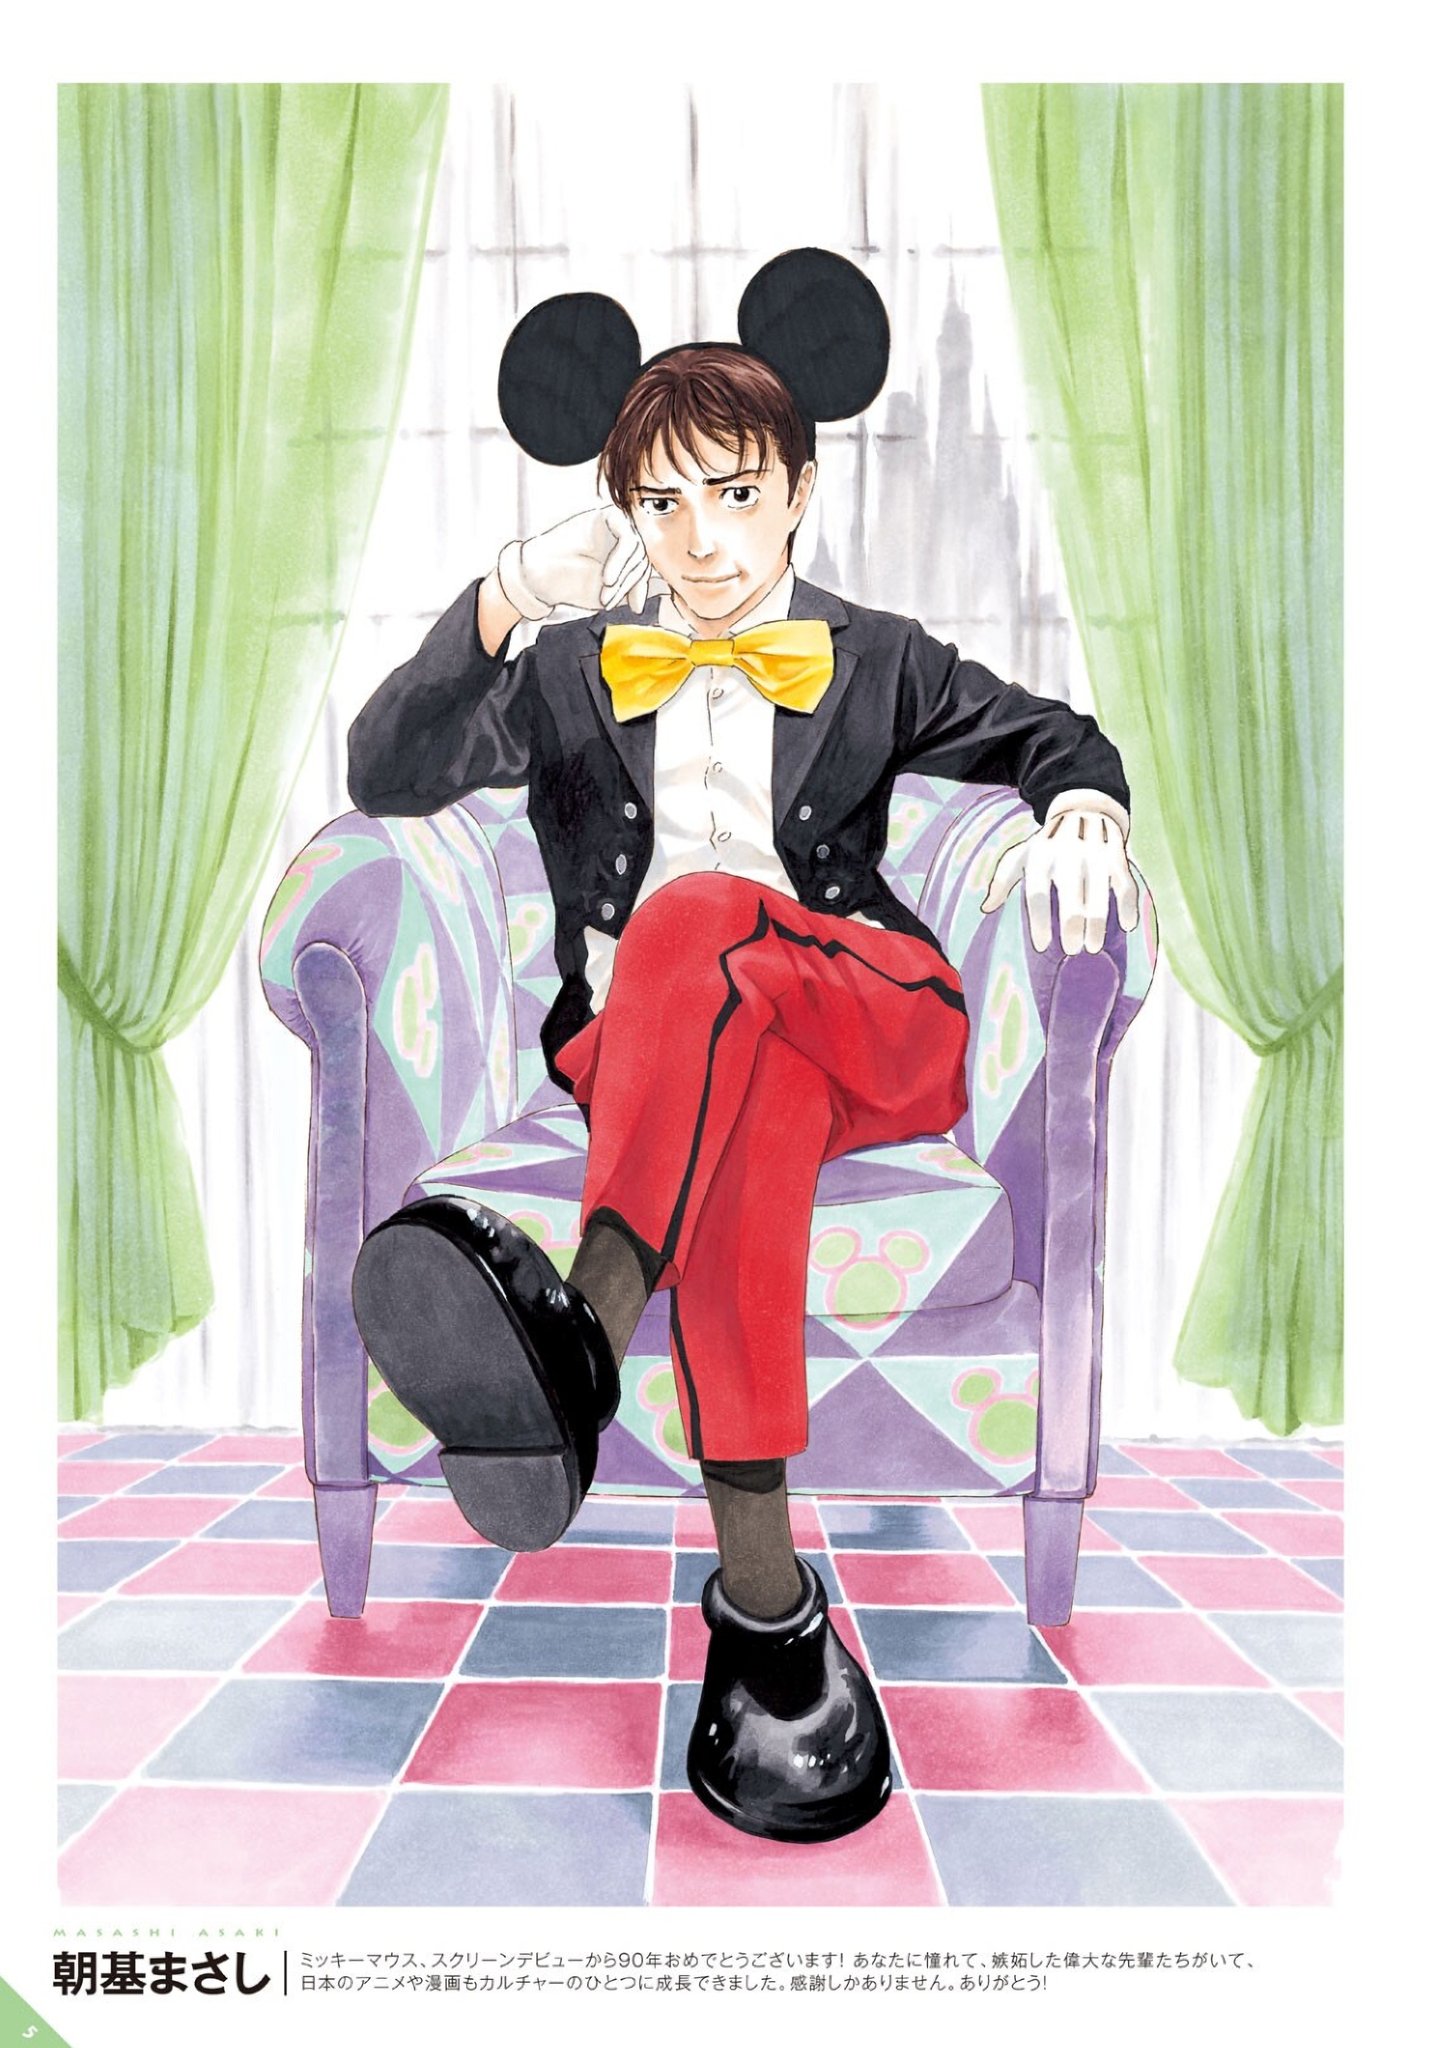 My Home Hero Image by Asaki Masashi #3813932 - Zerochan Anime